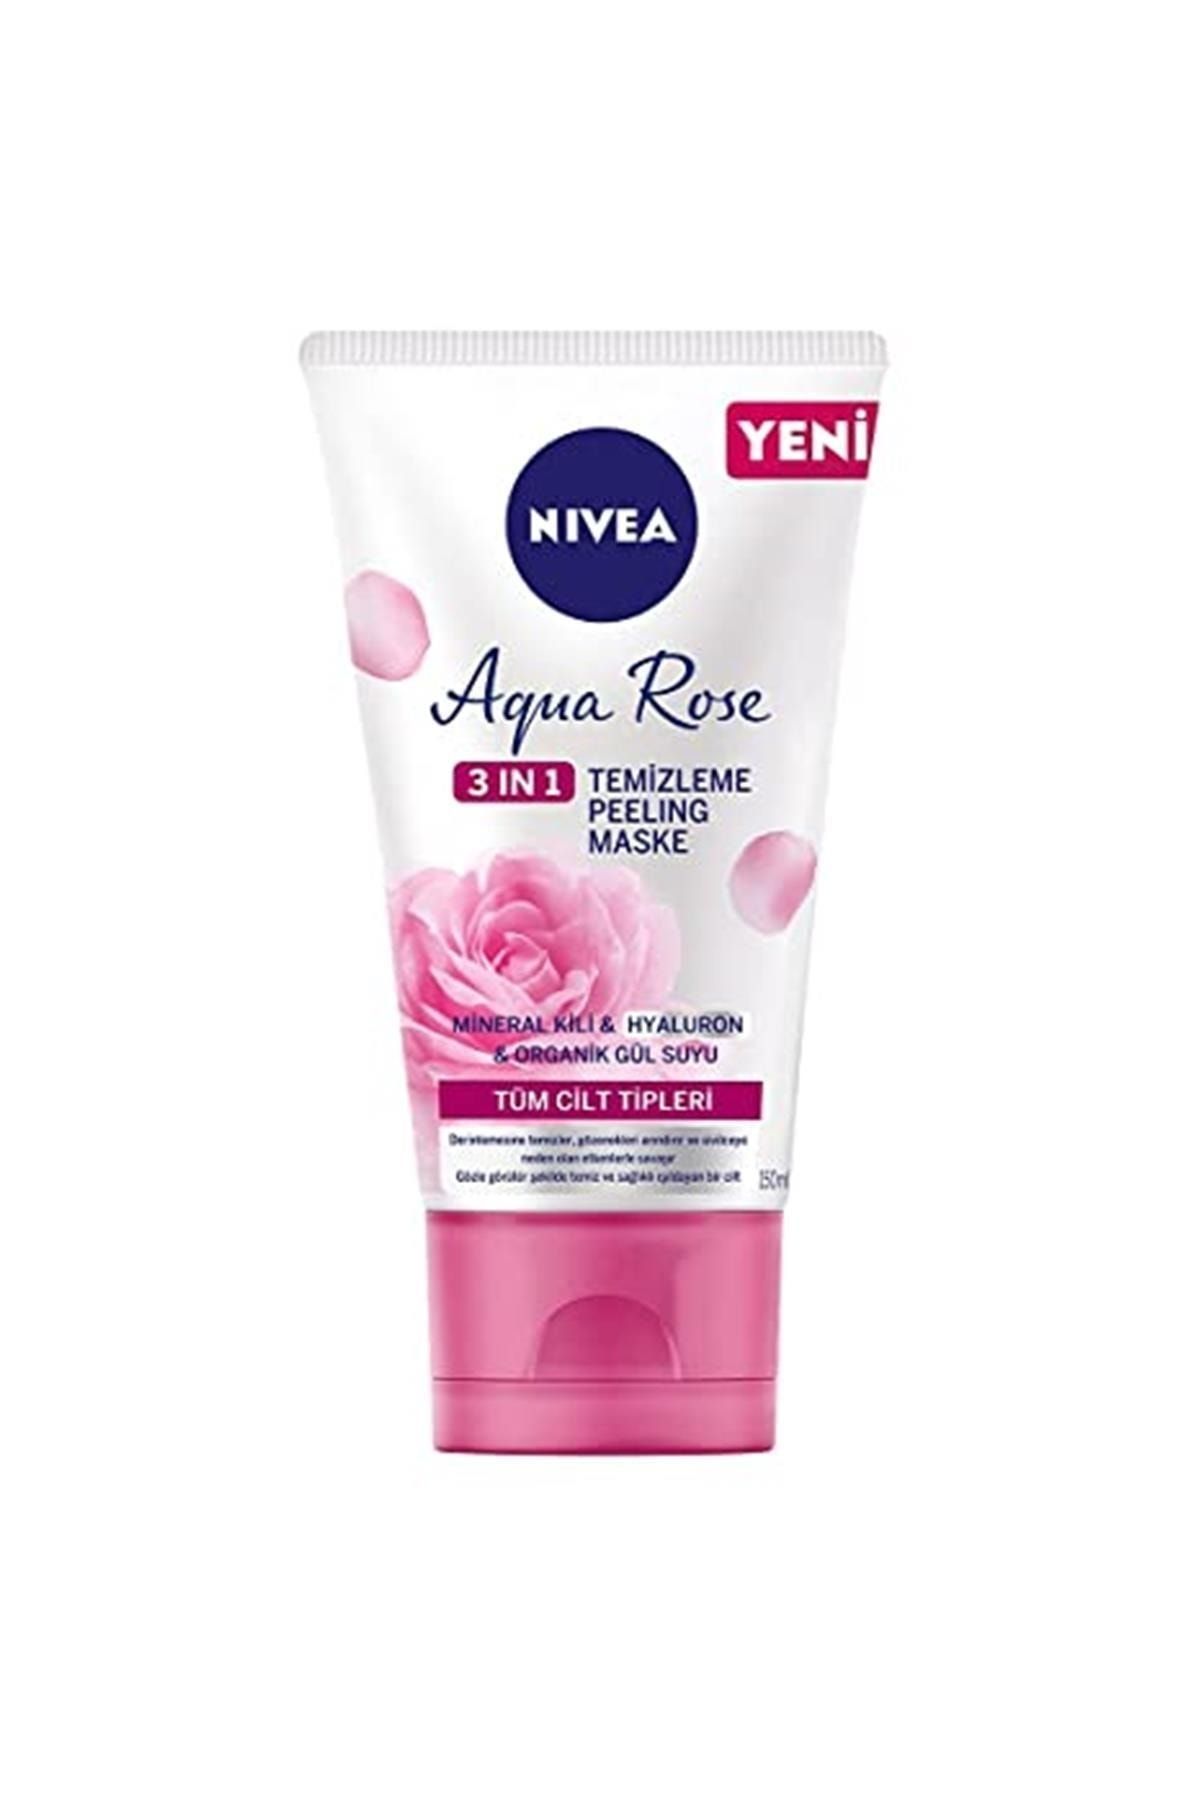 NIVEA Aqua Rose 3ü1 Arada Yüz Temizleme Peeling Maske Organik Gül Suyu Hyaluron, Mineral Kili (15